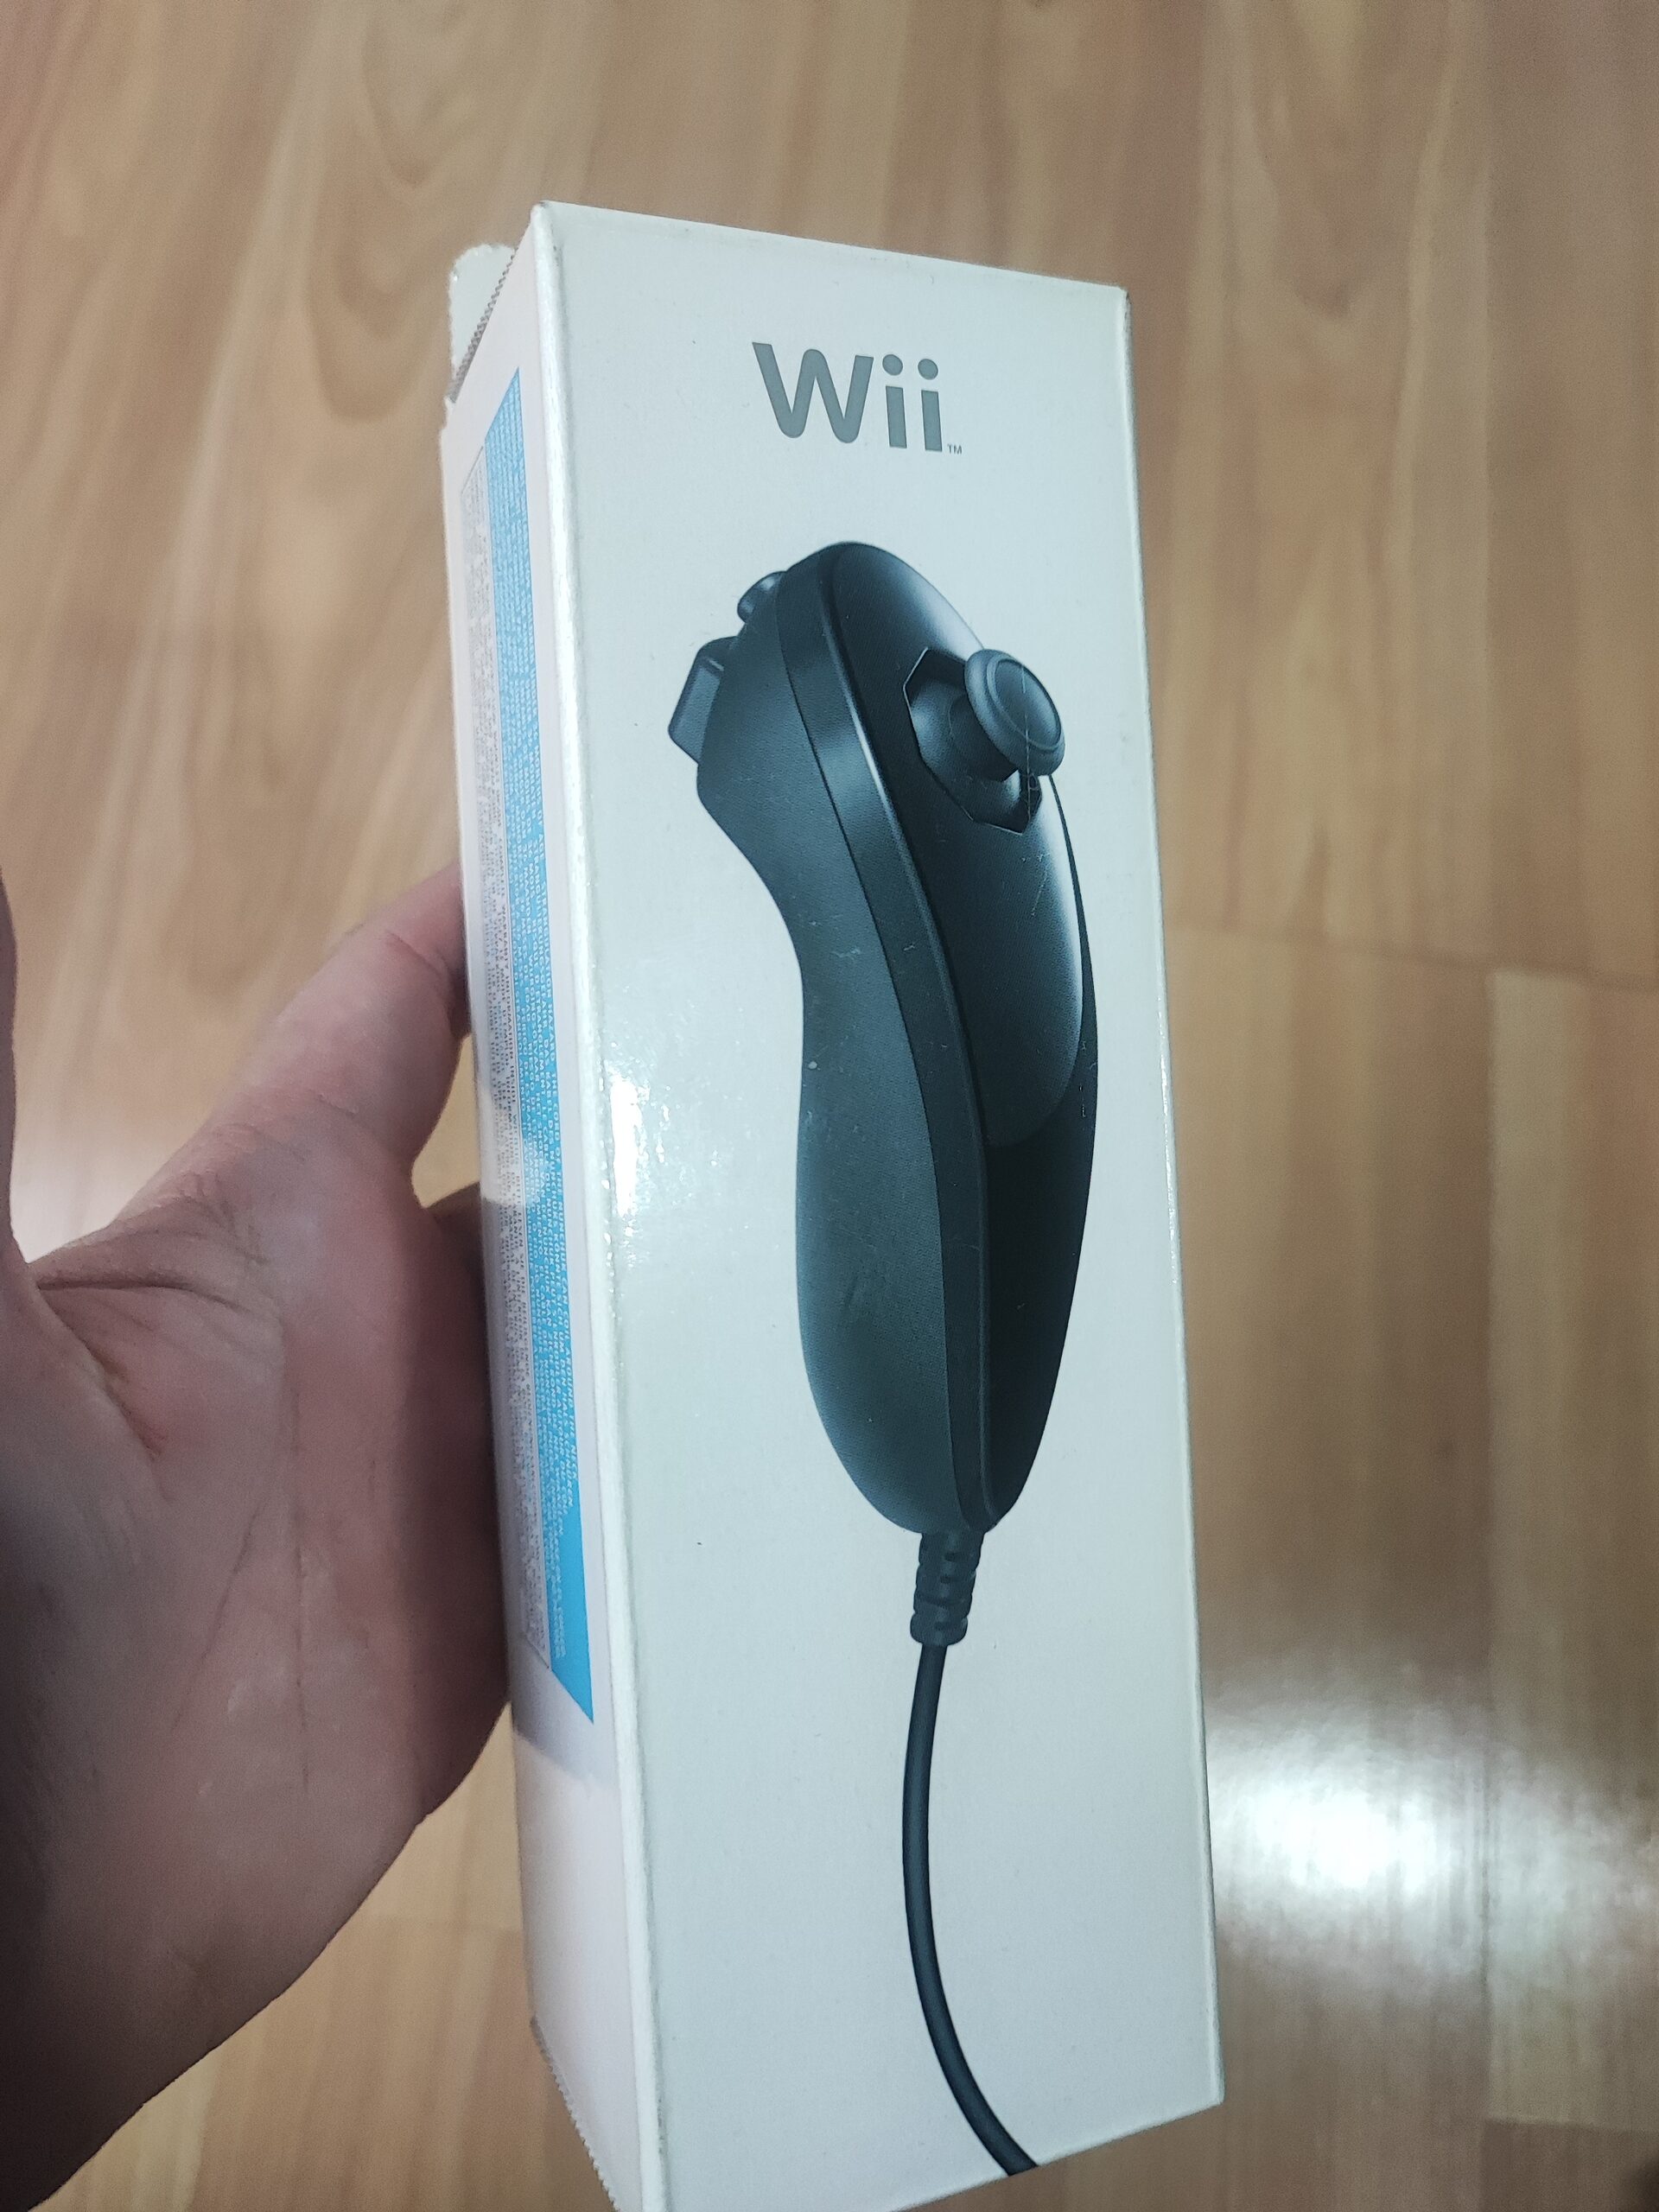 Mando + Nunchuk Nintendo Wii Original de segunda mano por 17,5 EUR en  Algeciras en WALLAPOP